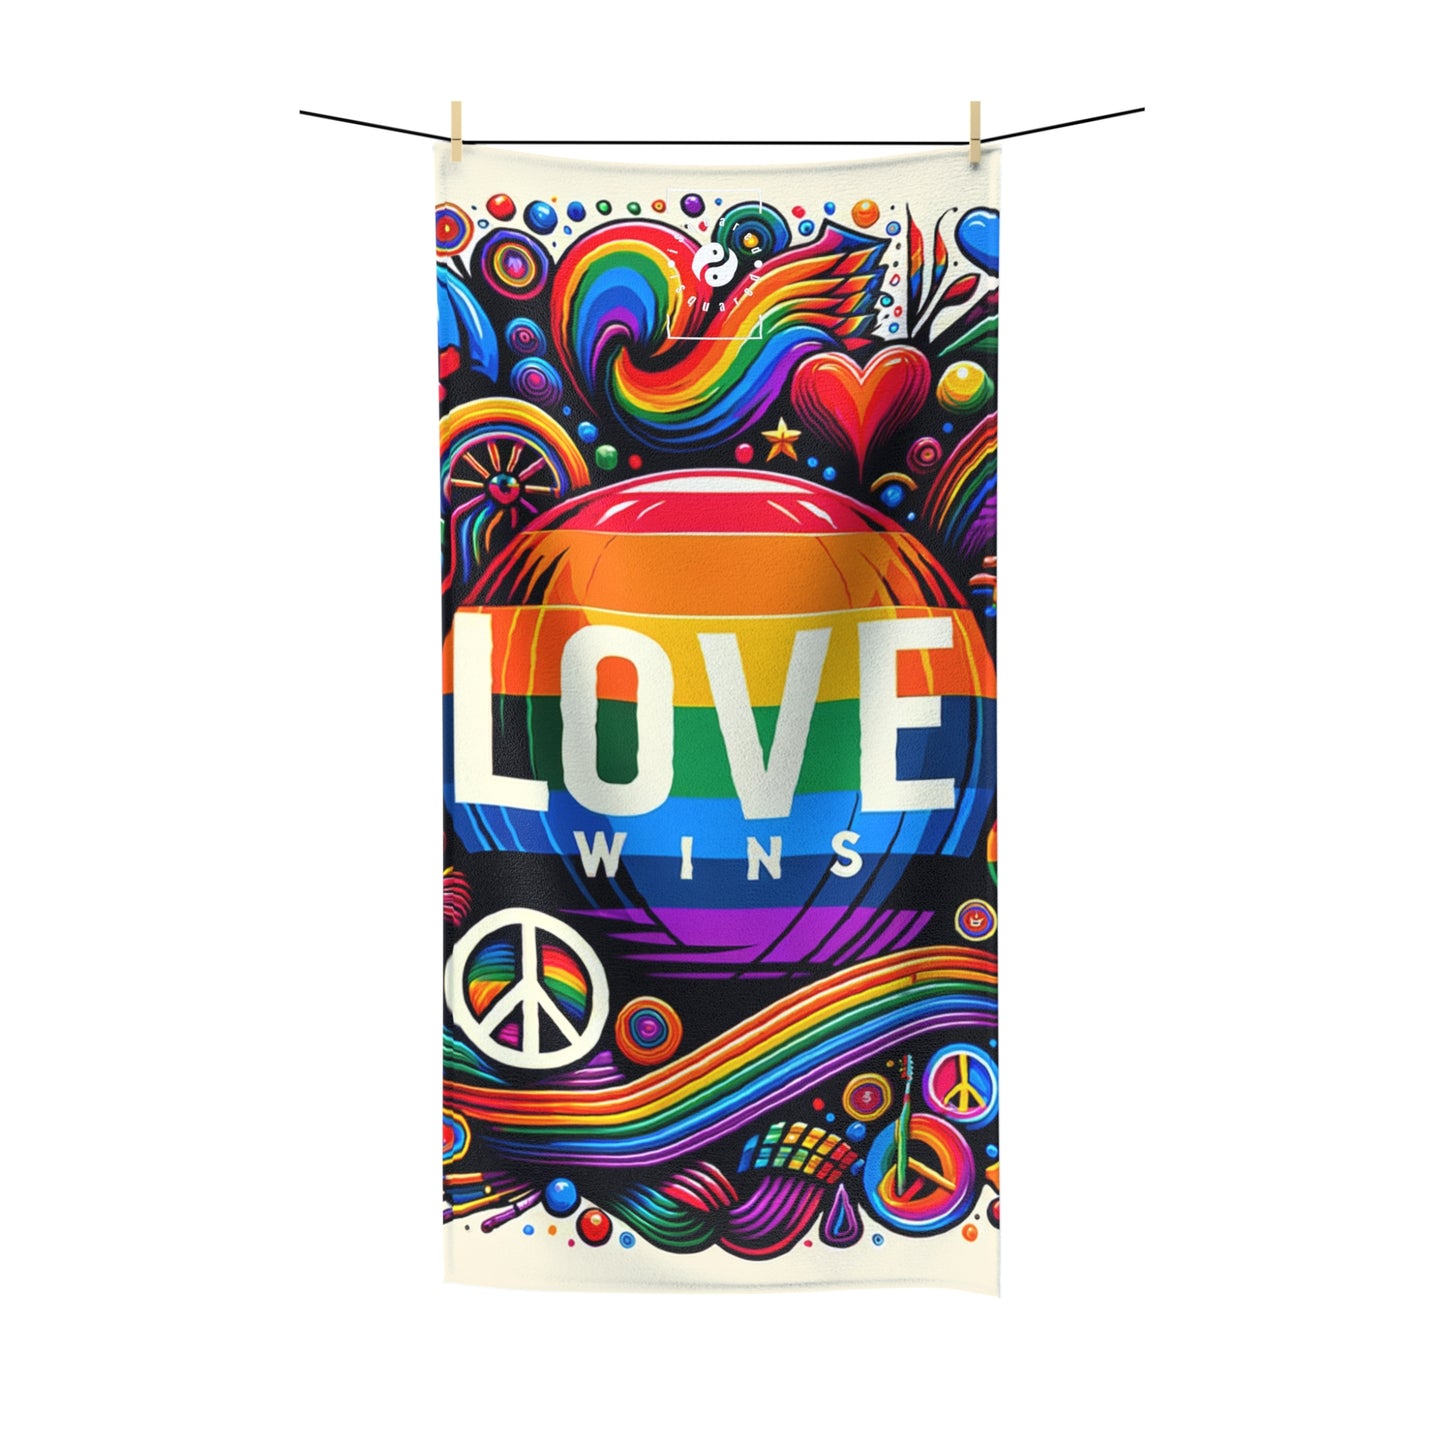 LOVE WINS - All Purpose Yoga Towel